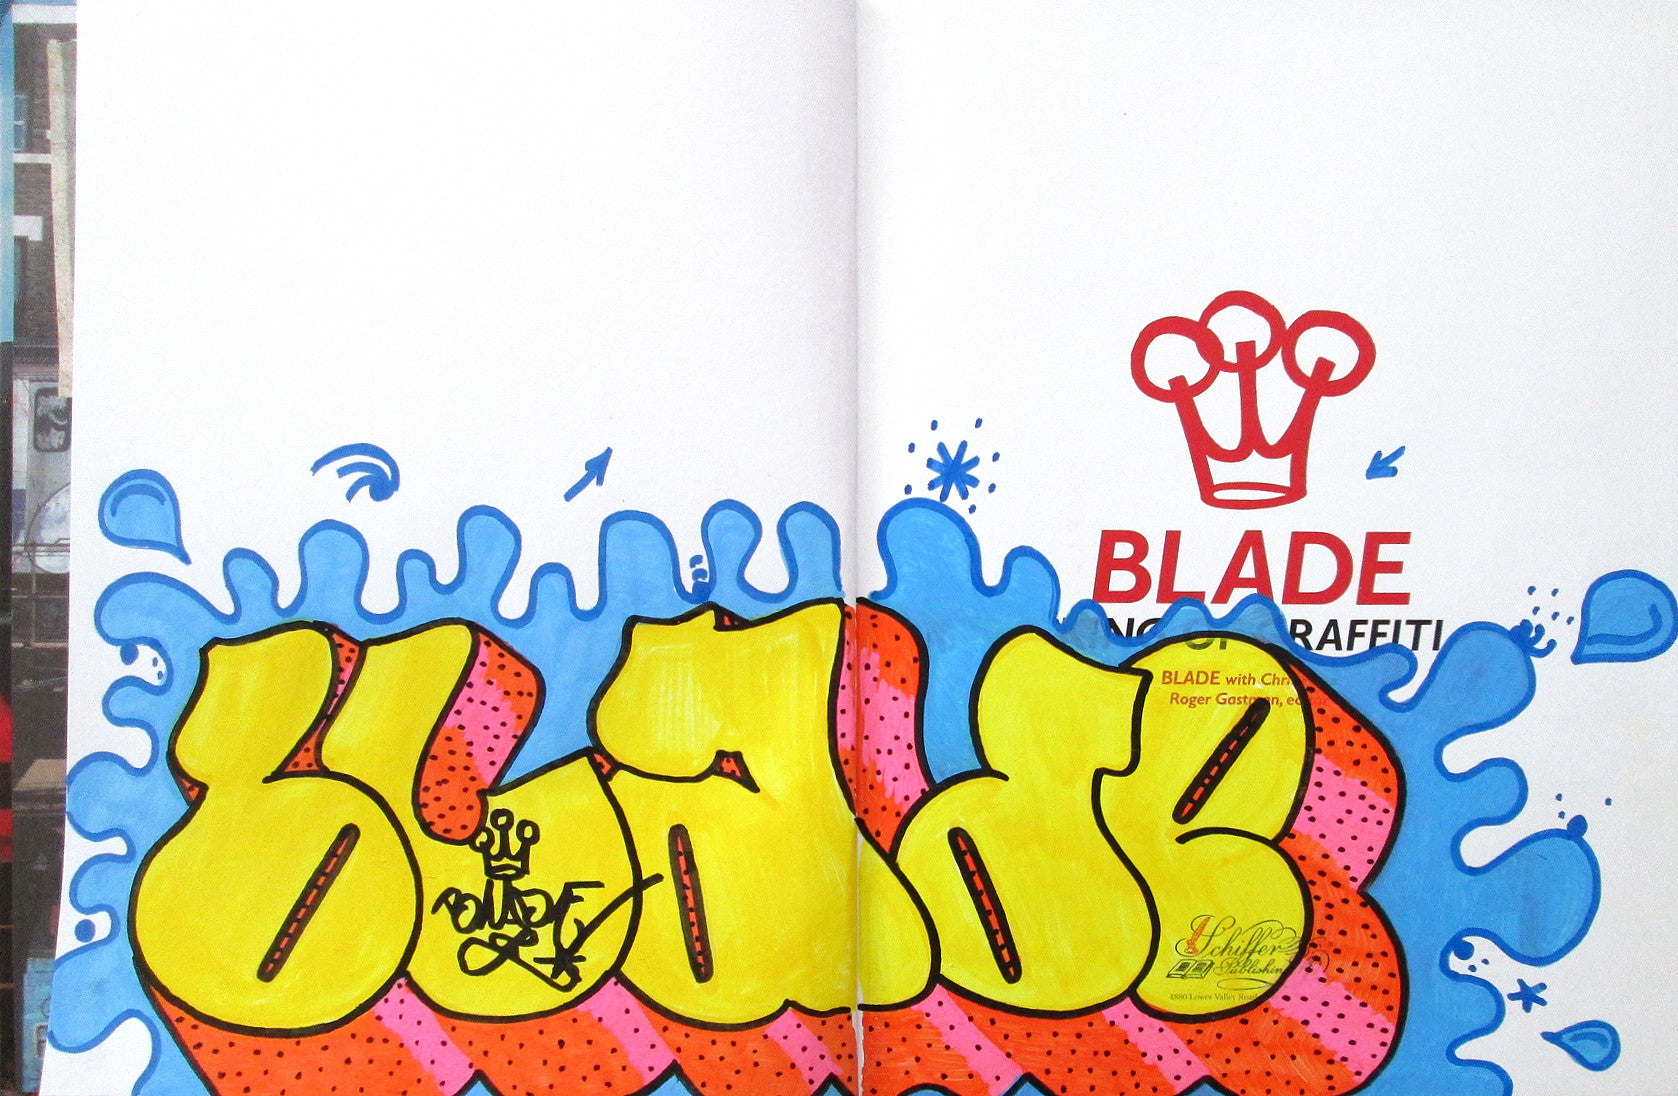 BLADE - "King of graffiti" Custom Book Drawing 3